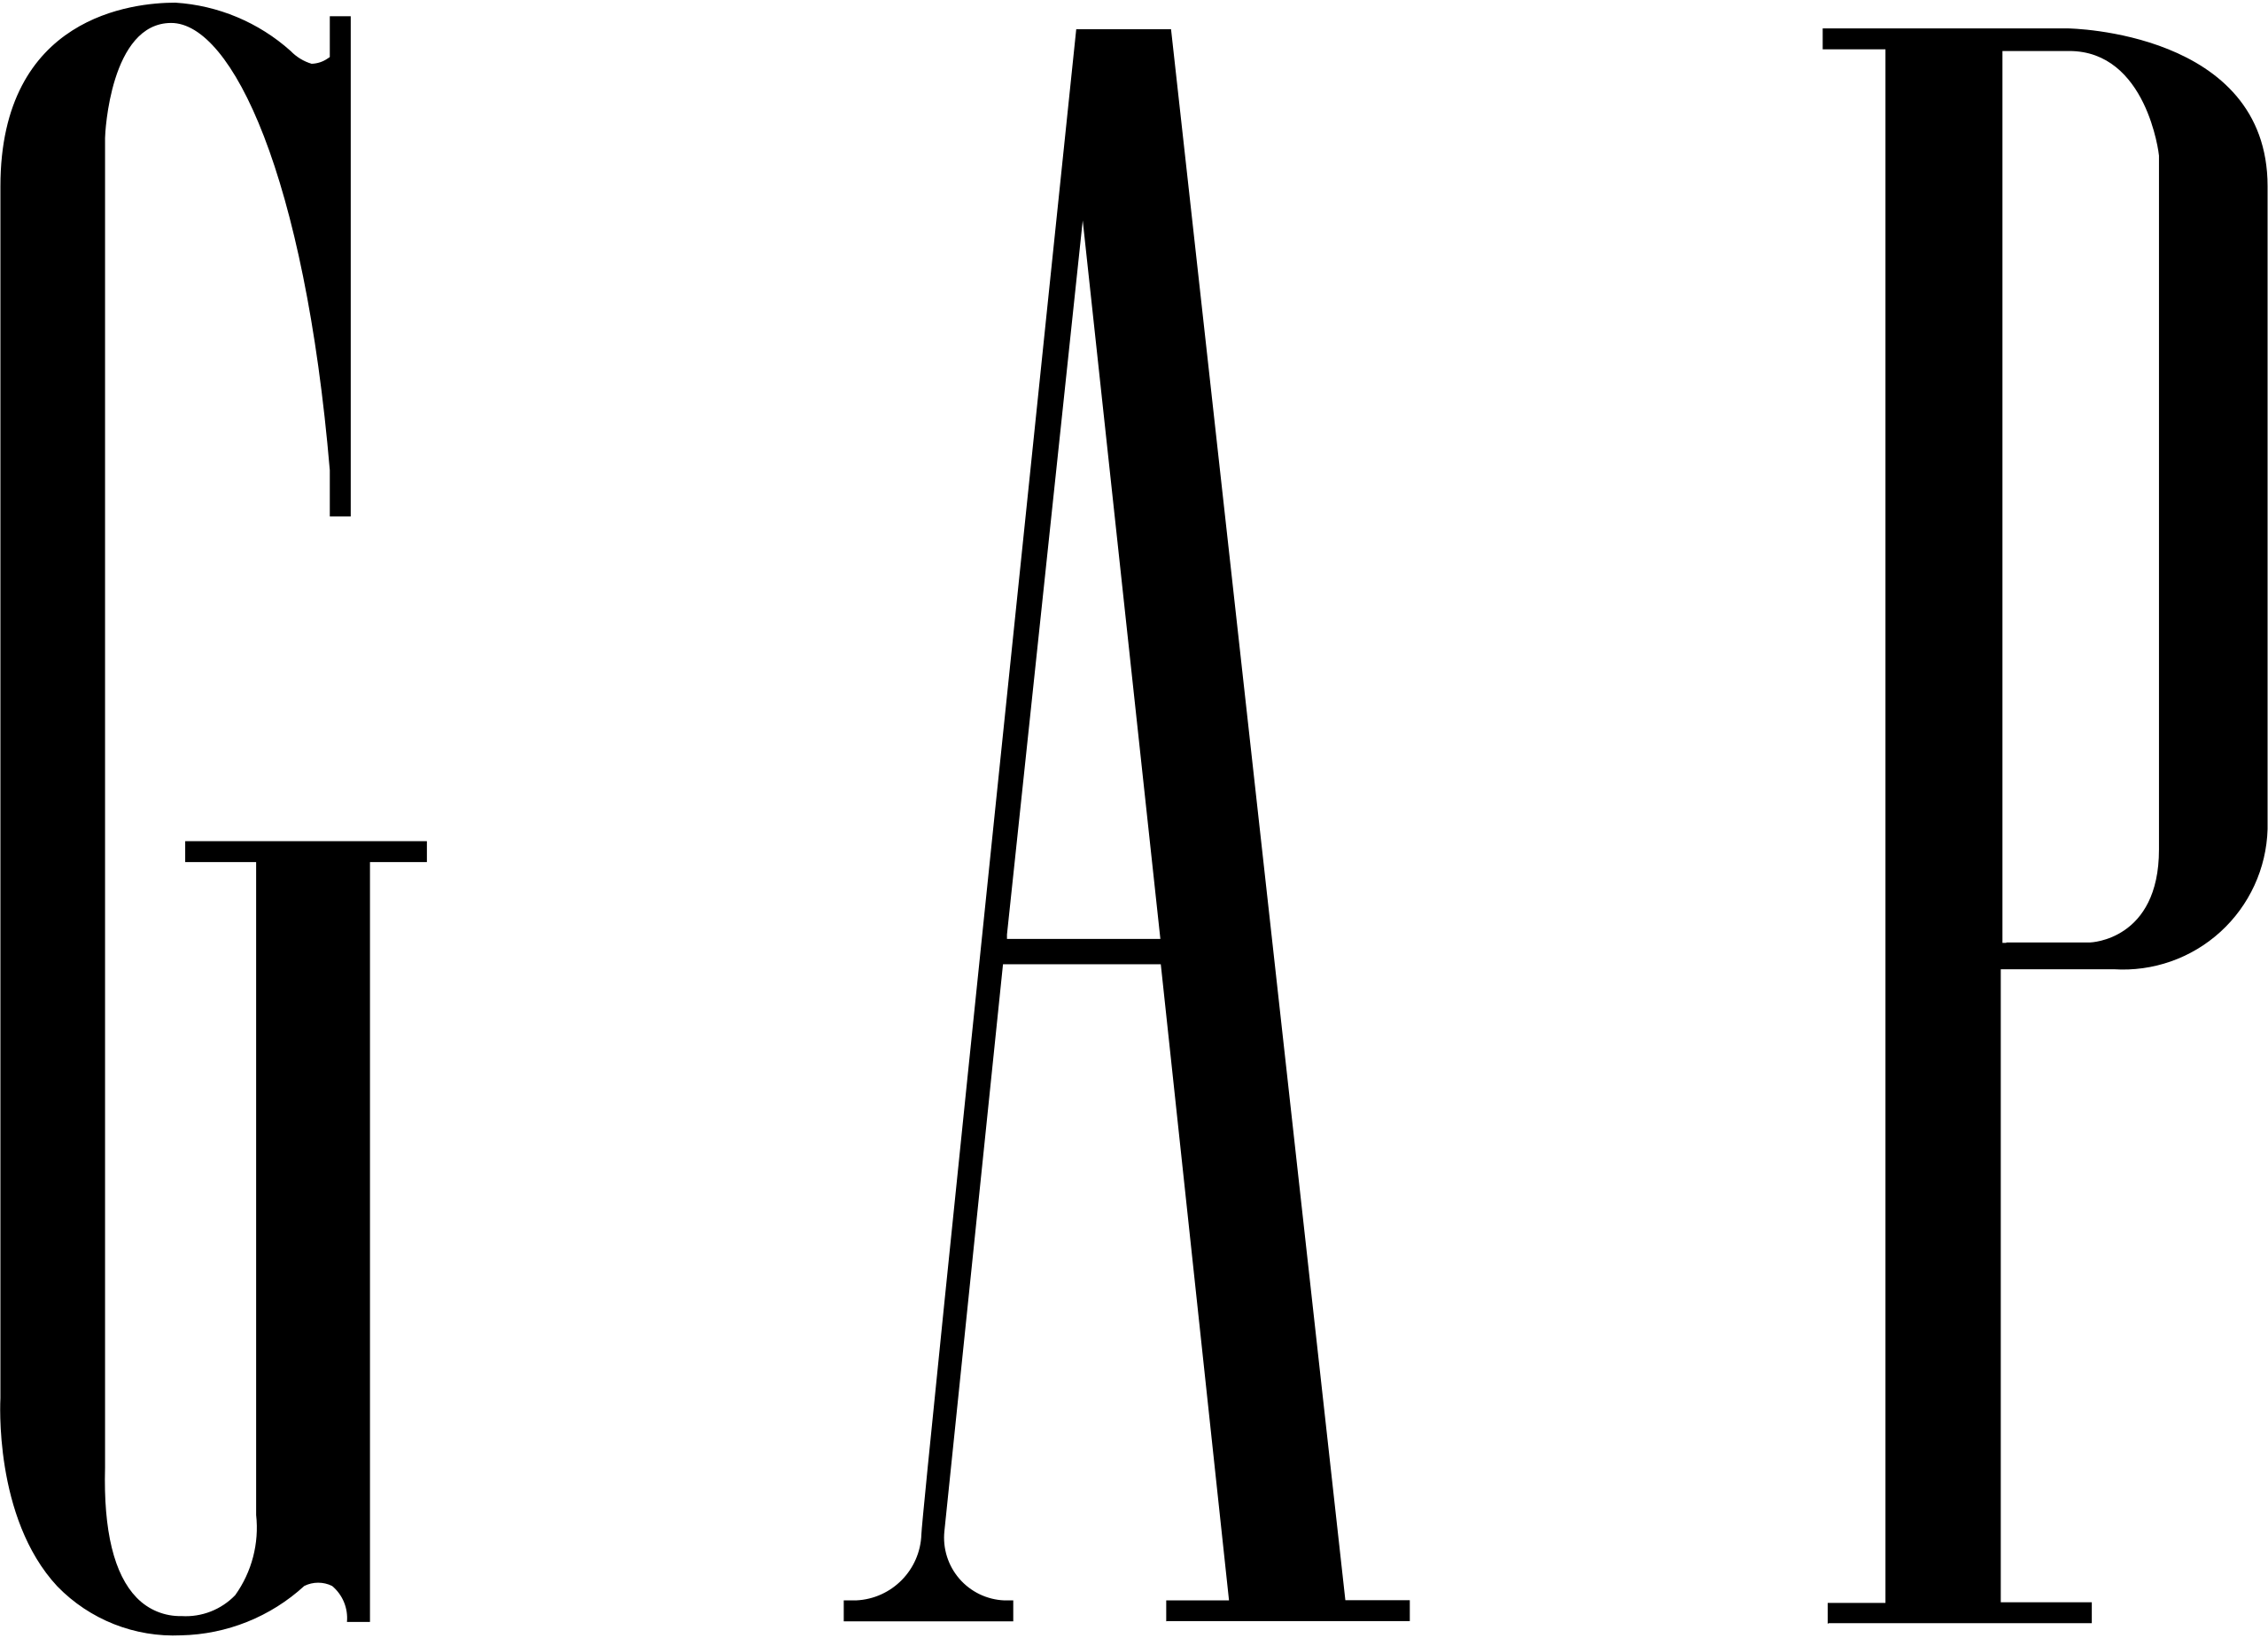 2560px-New_Gap_logo.svg